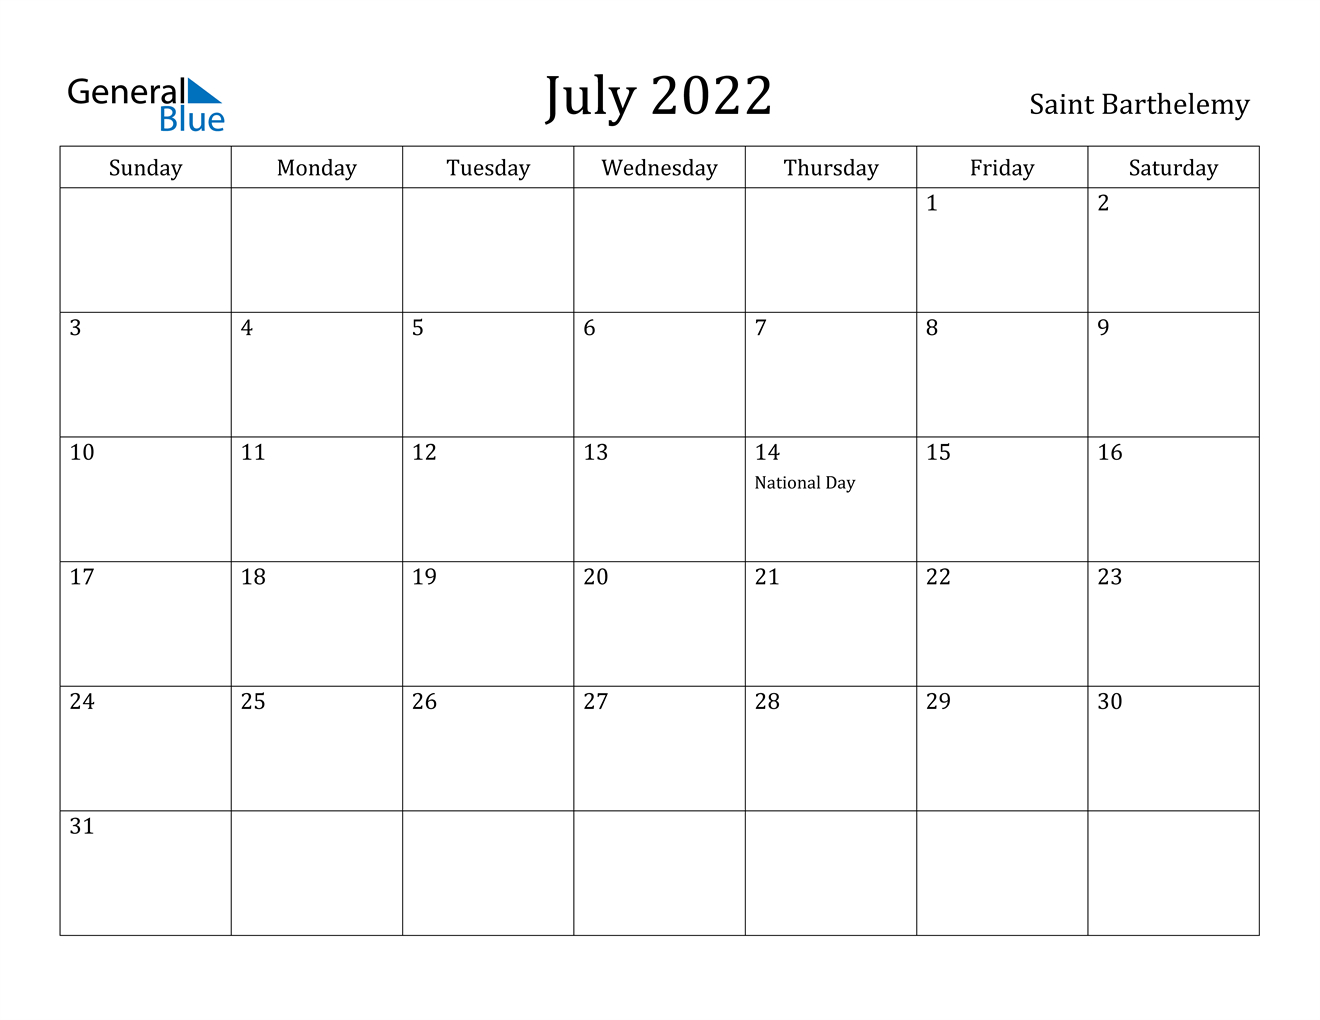 July 2022 Calendar - Saint Barthelemy